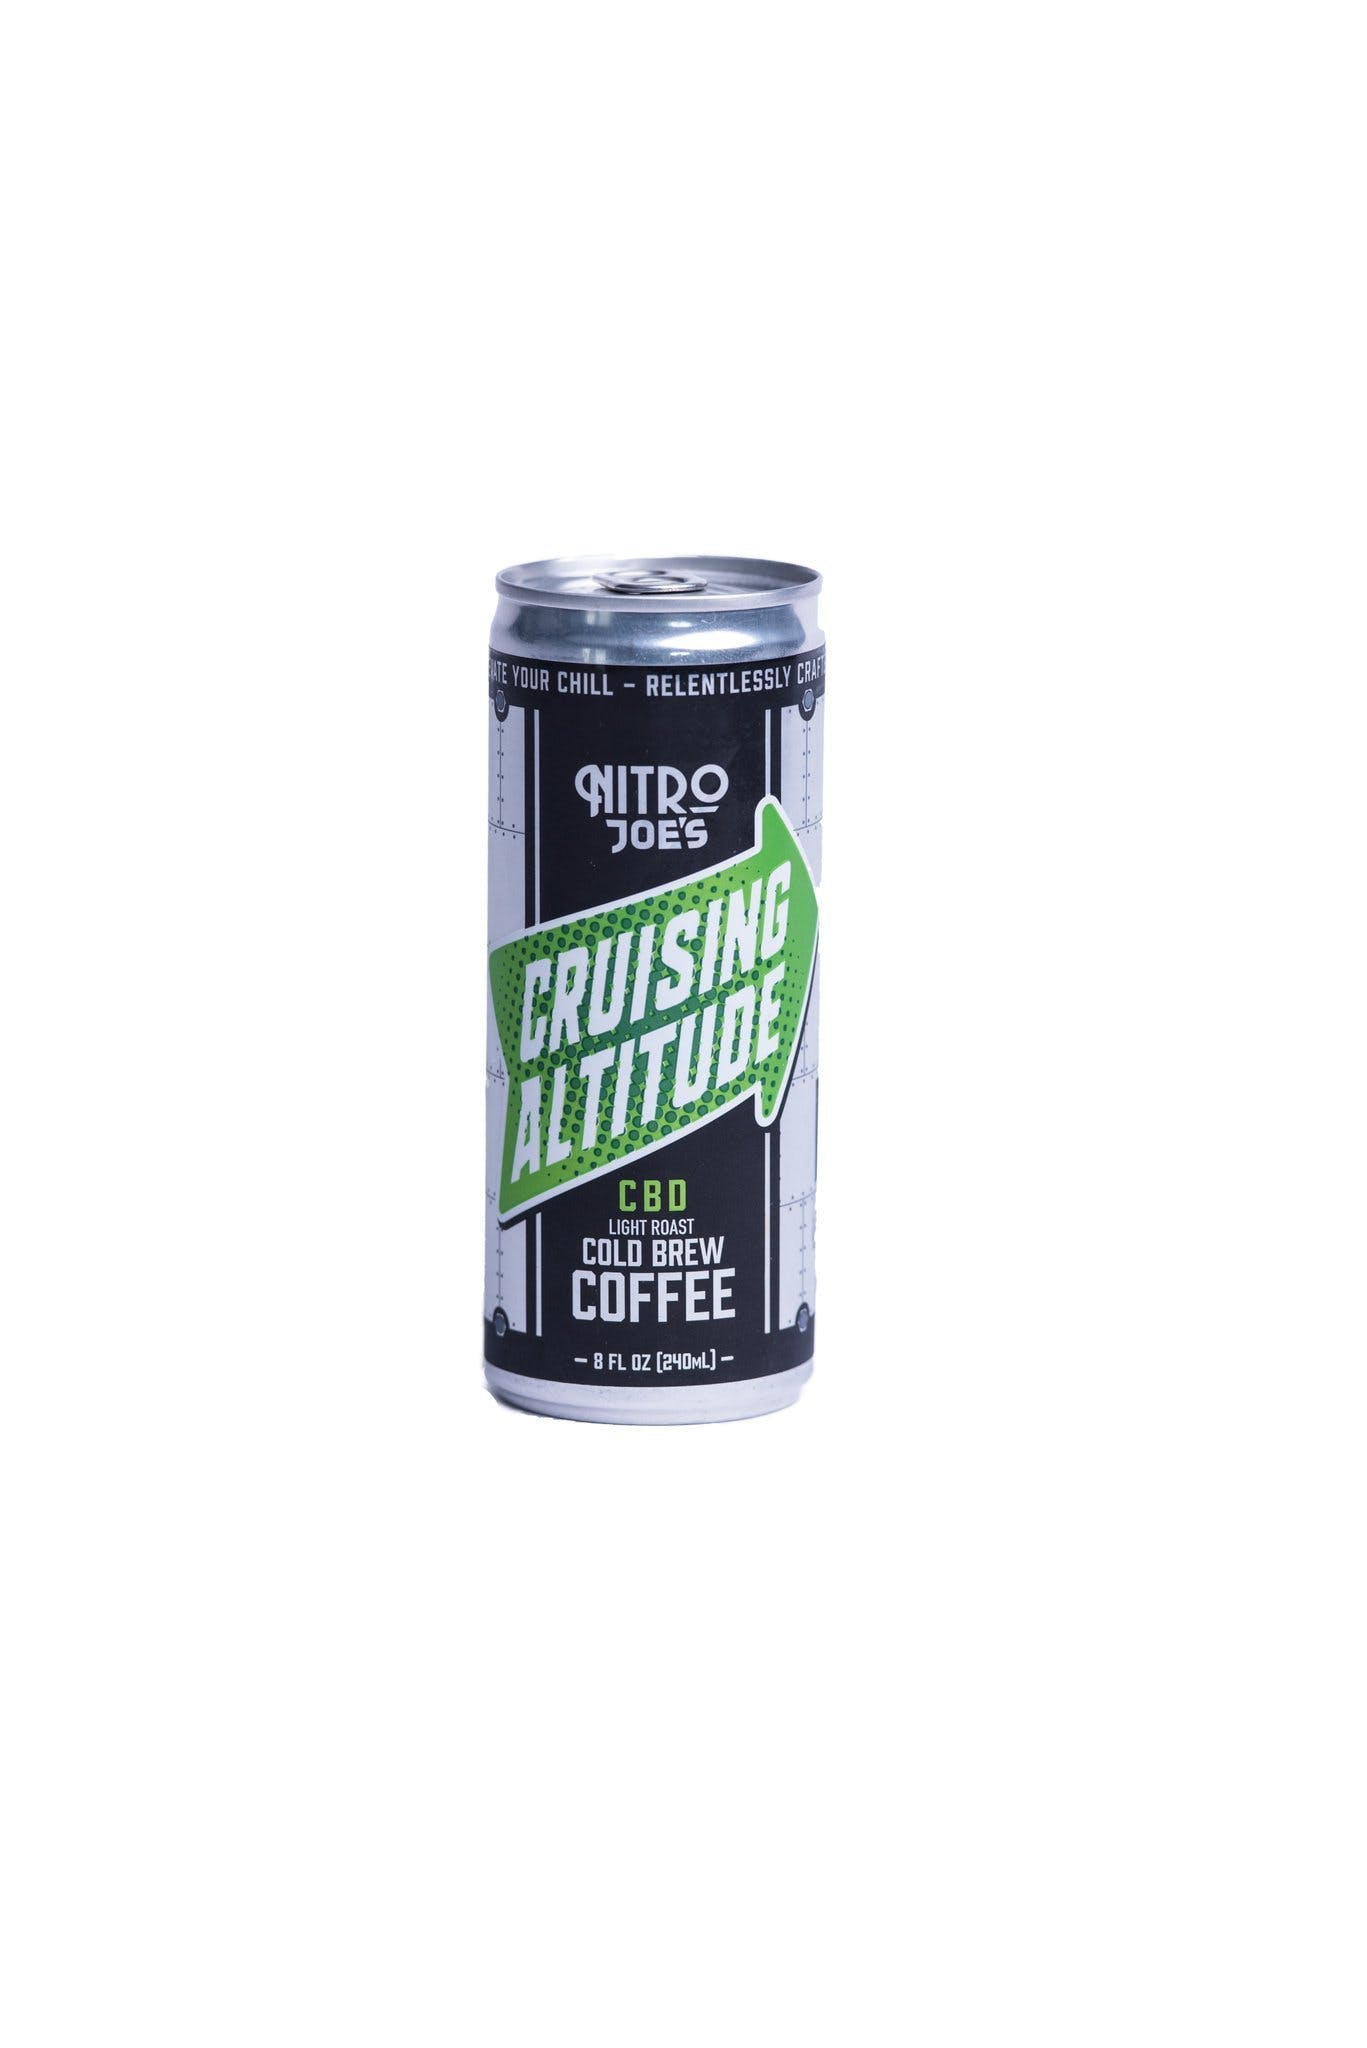 drink-nitro-joes-cbd-cold-brew-coffee